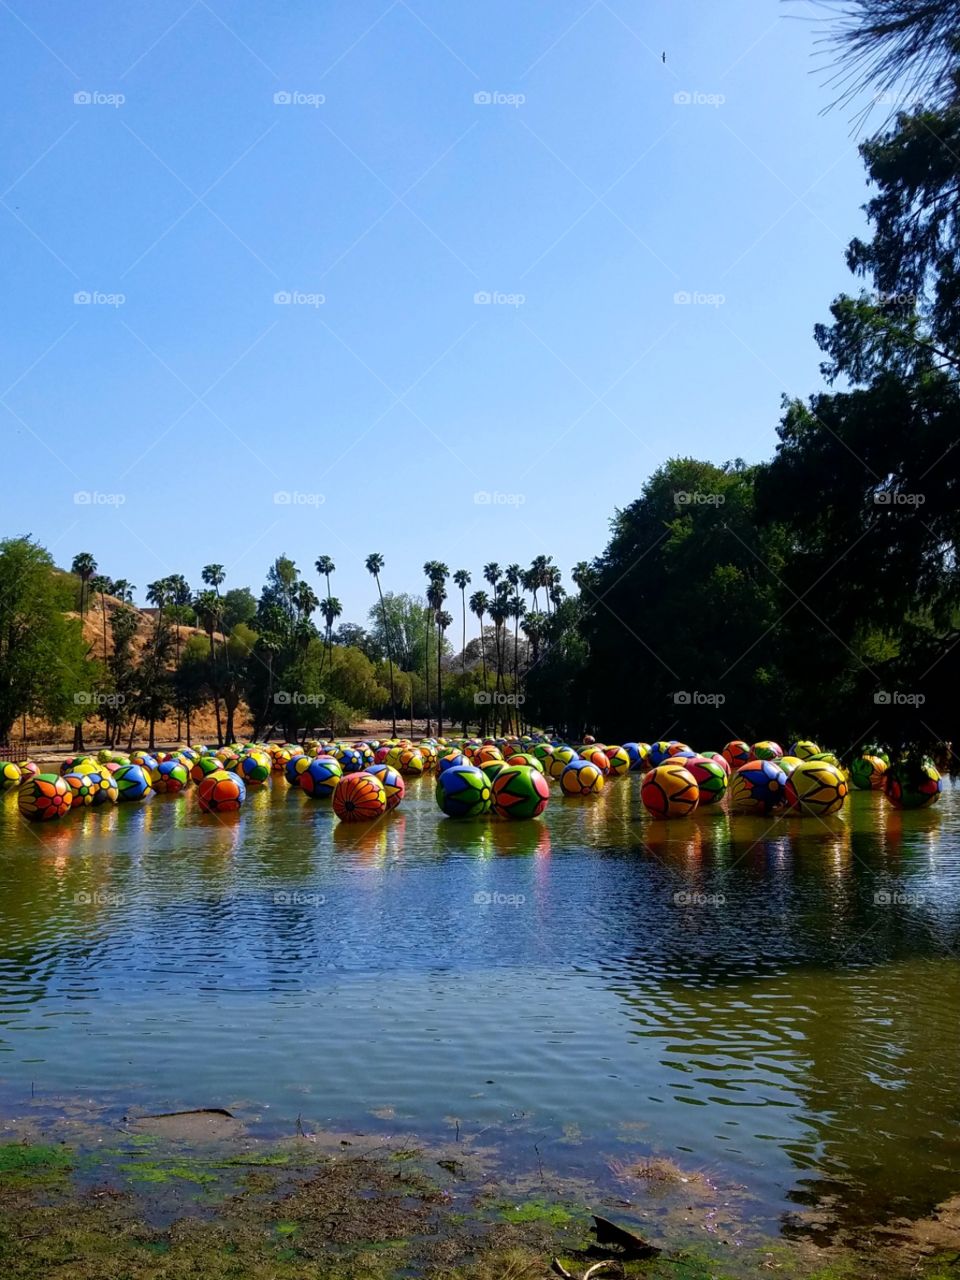 floating colored flower balls on lake in riverside California at Fairmount park